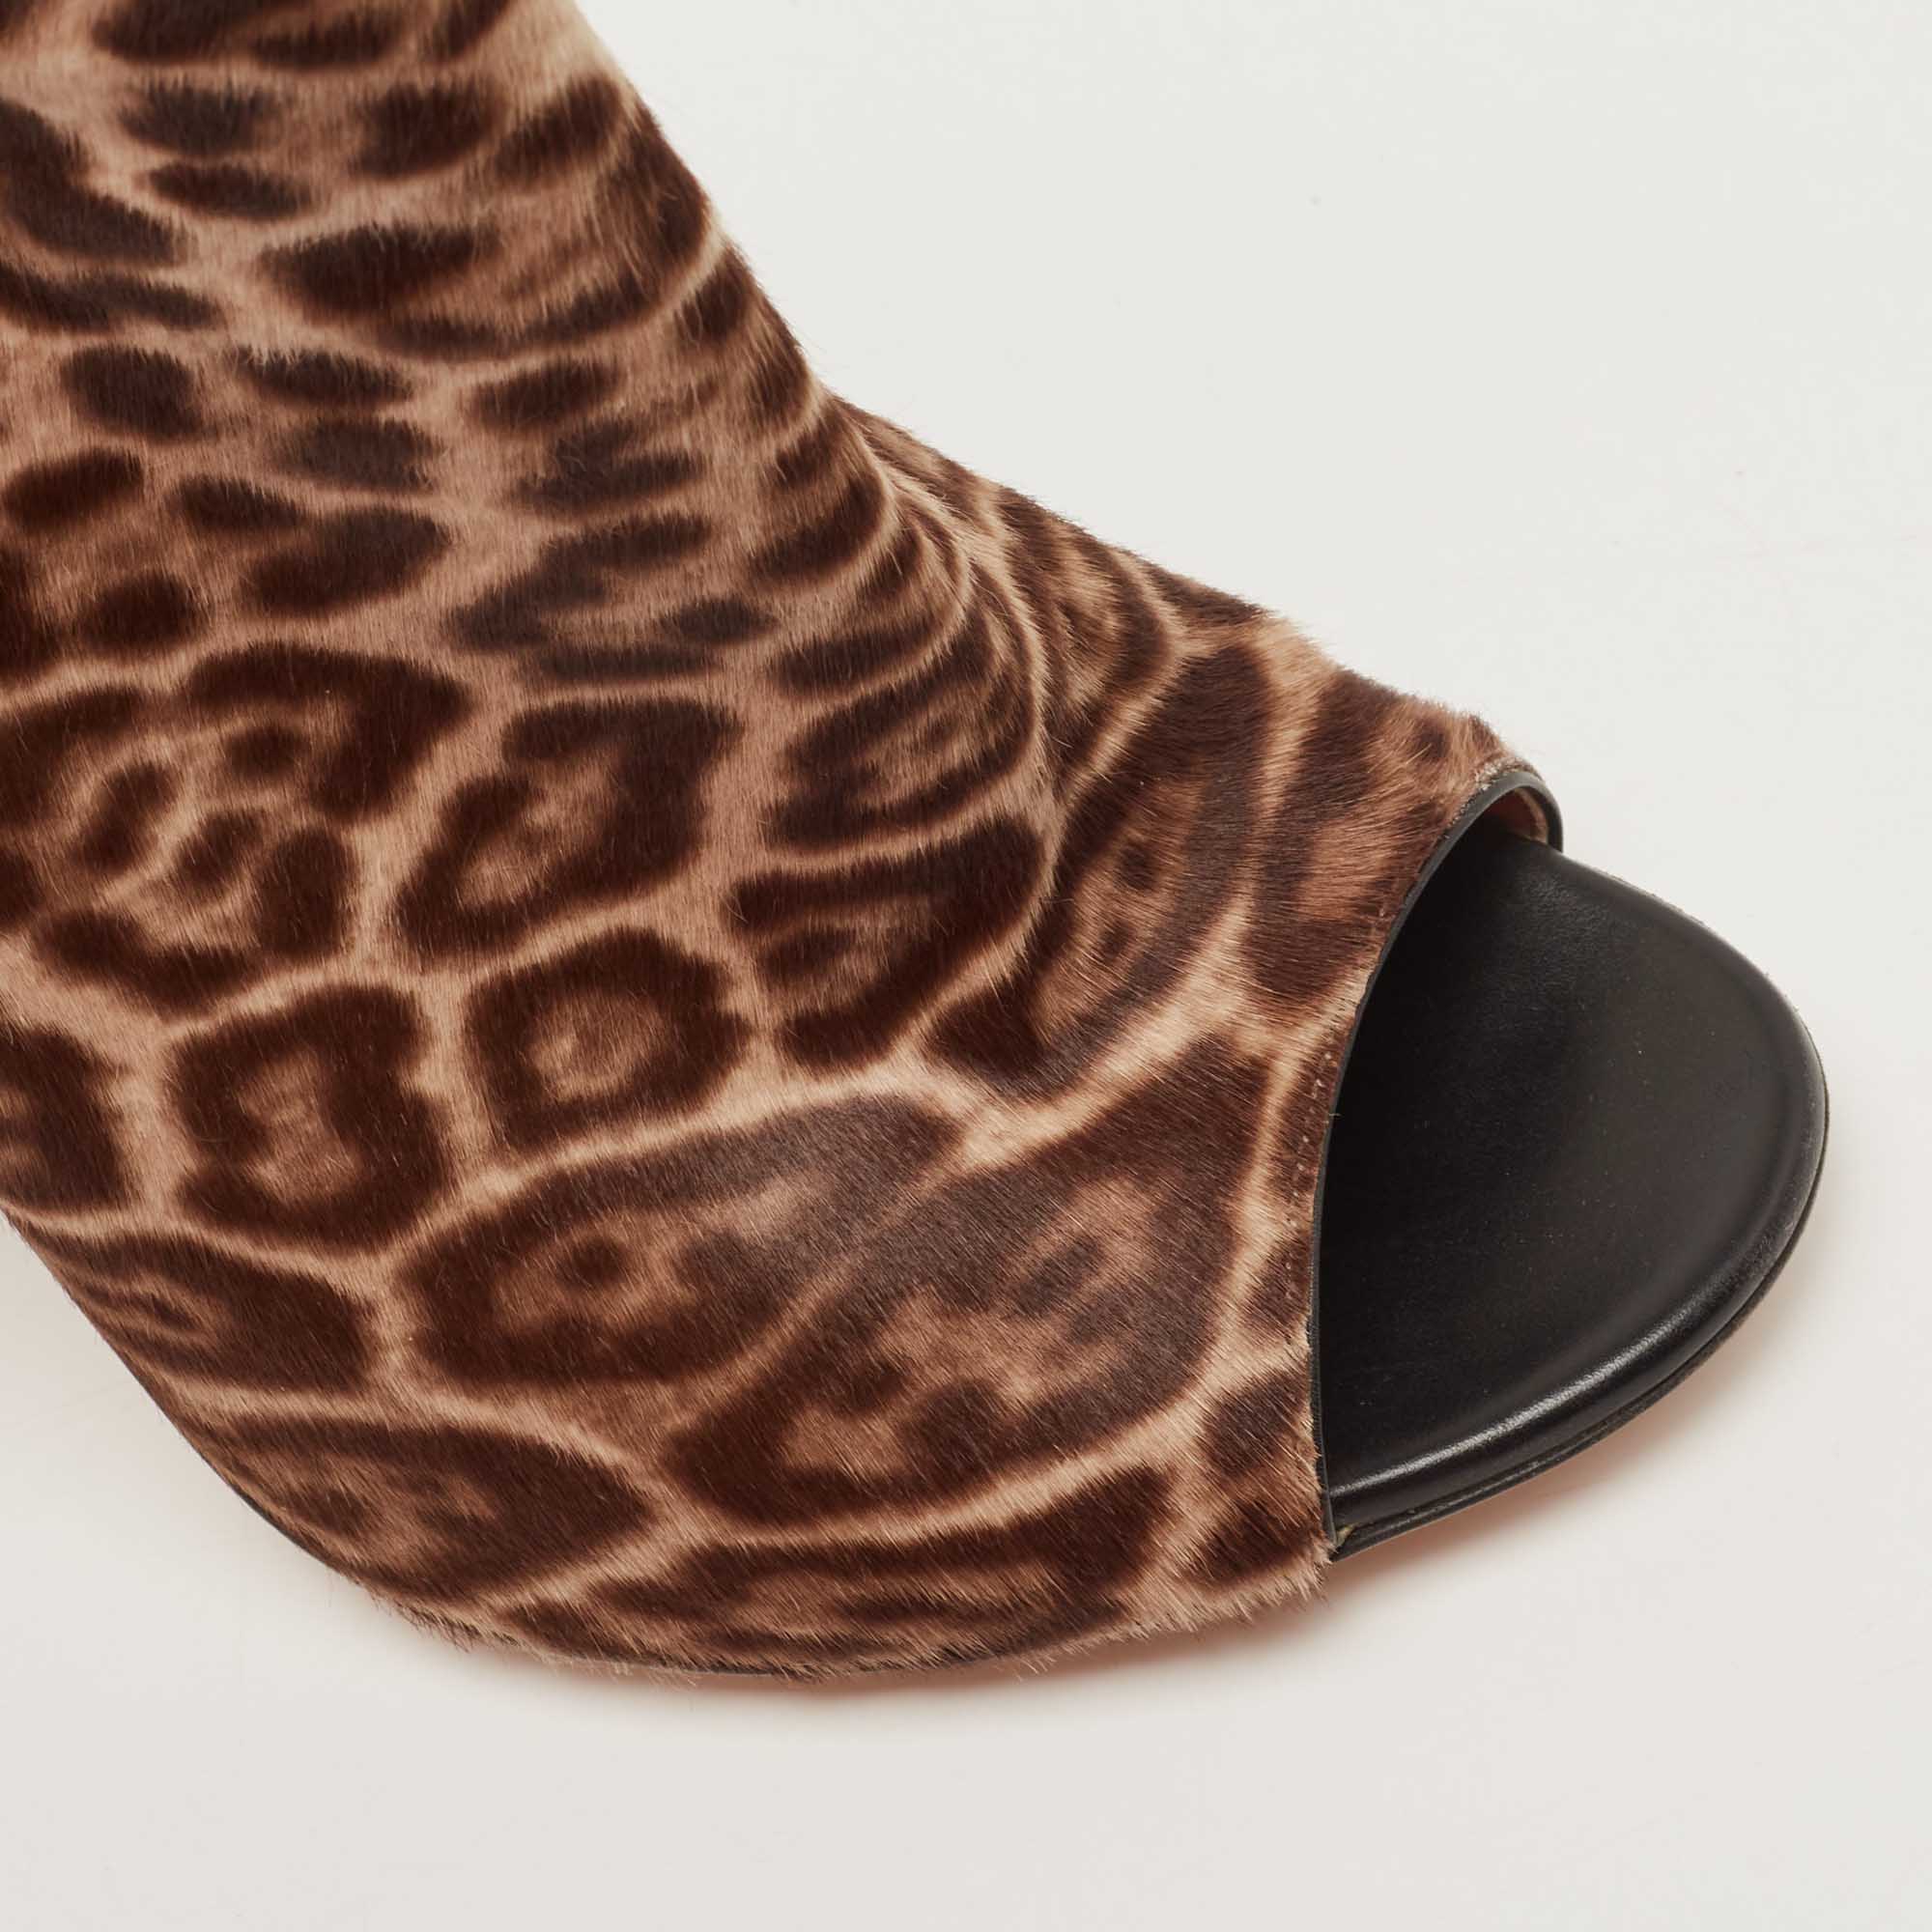 Gianvito Rossi Brown/Beige Calf Hair Peep Toe Ankle Booties Size 37.5